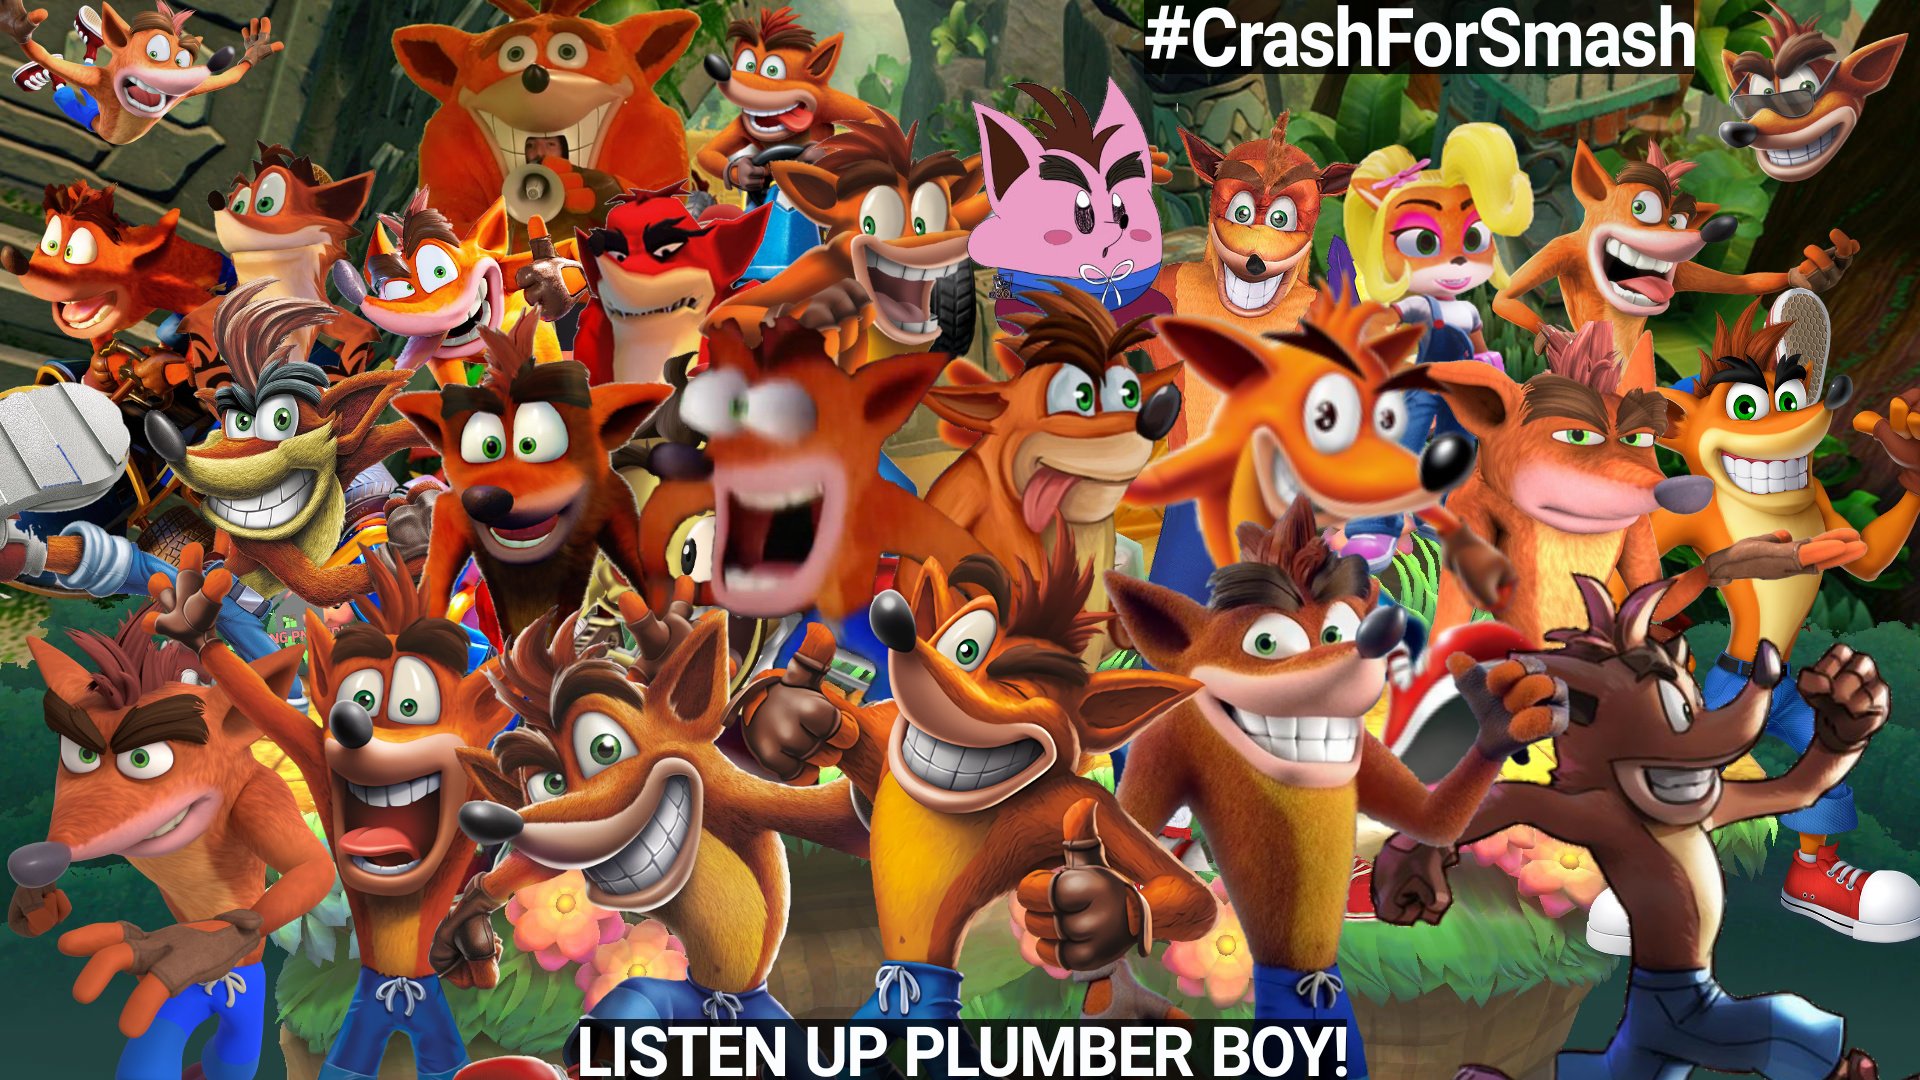 Will Crash Bandicoot be in Smash Bros Ultimate?